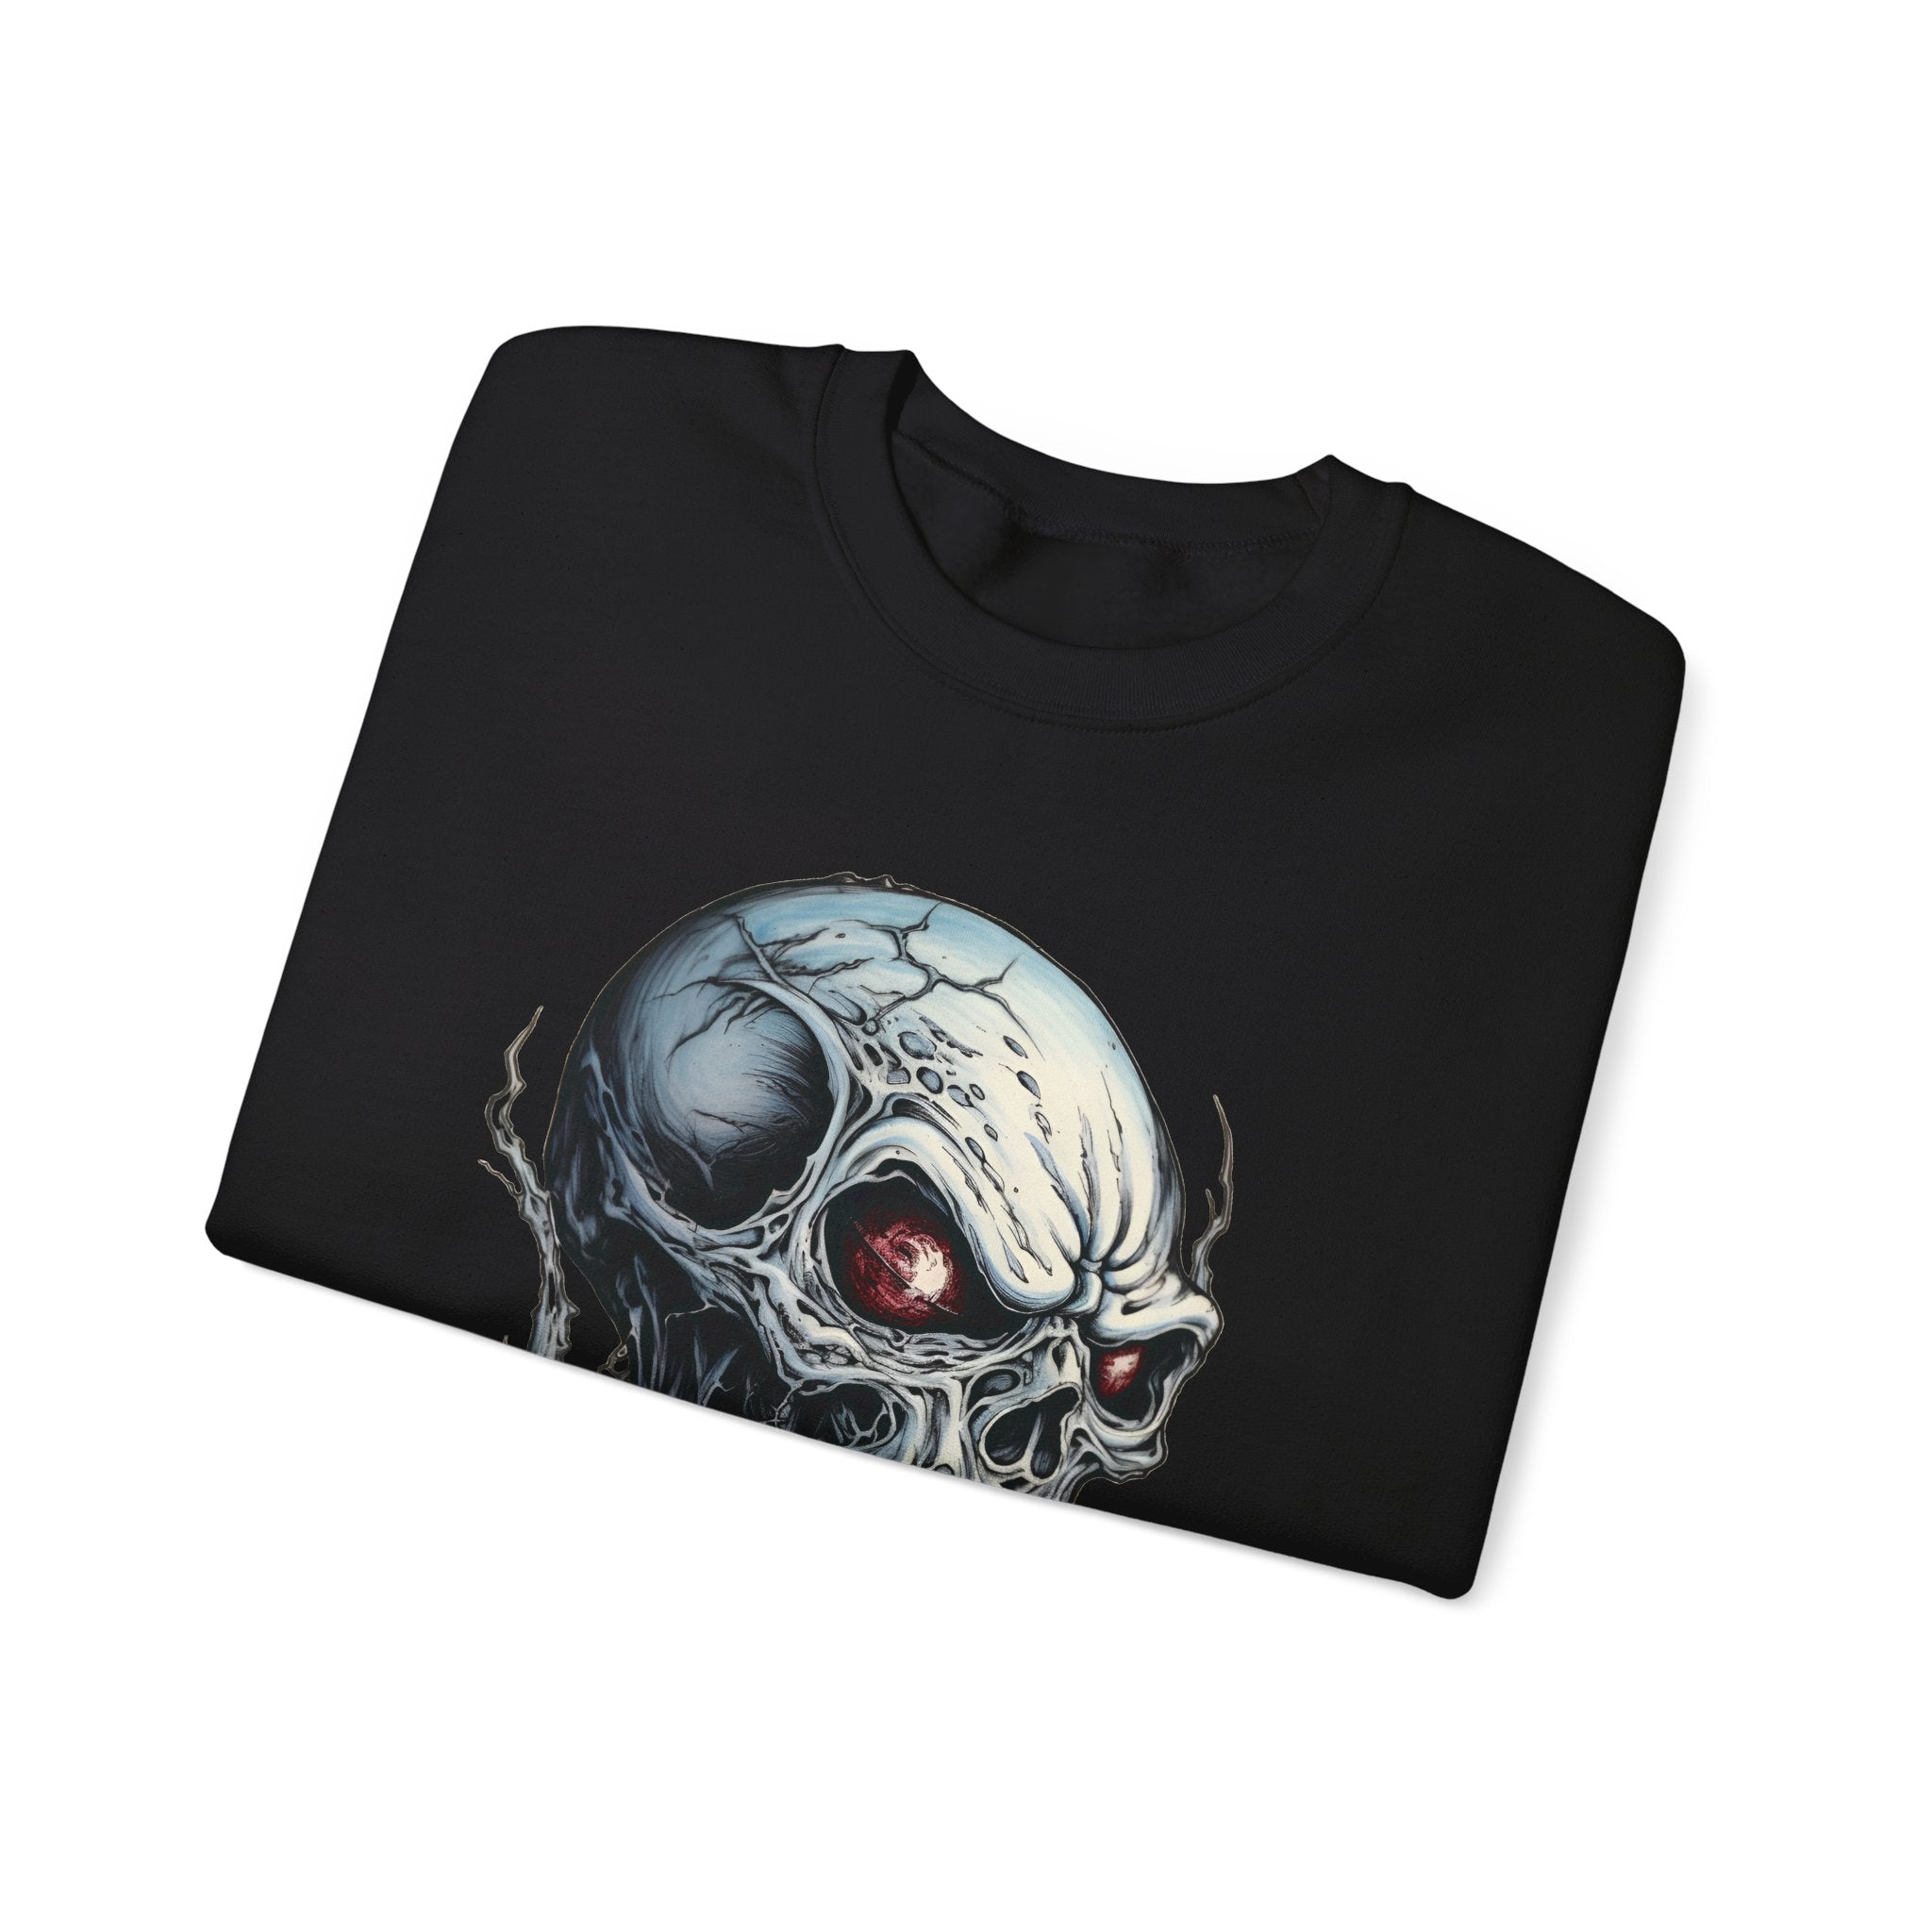 Unisex Heavy Blend Haunted Skull Crewneck Sweatshirt